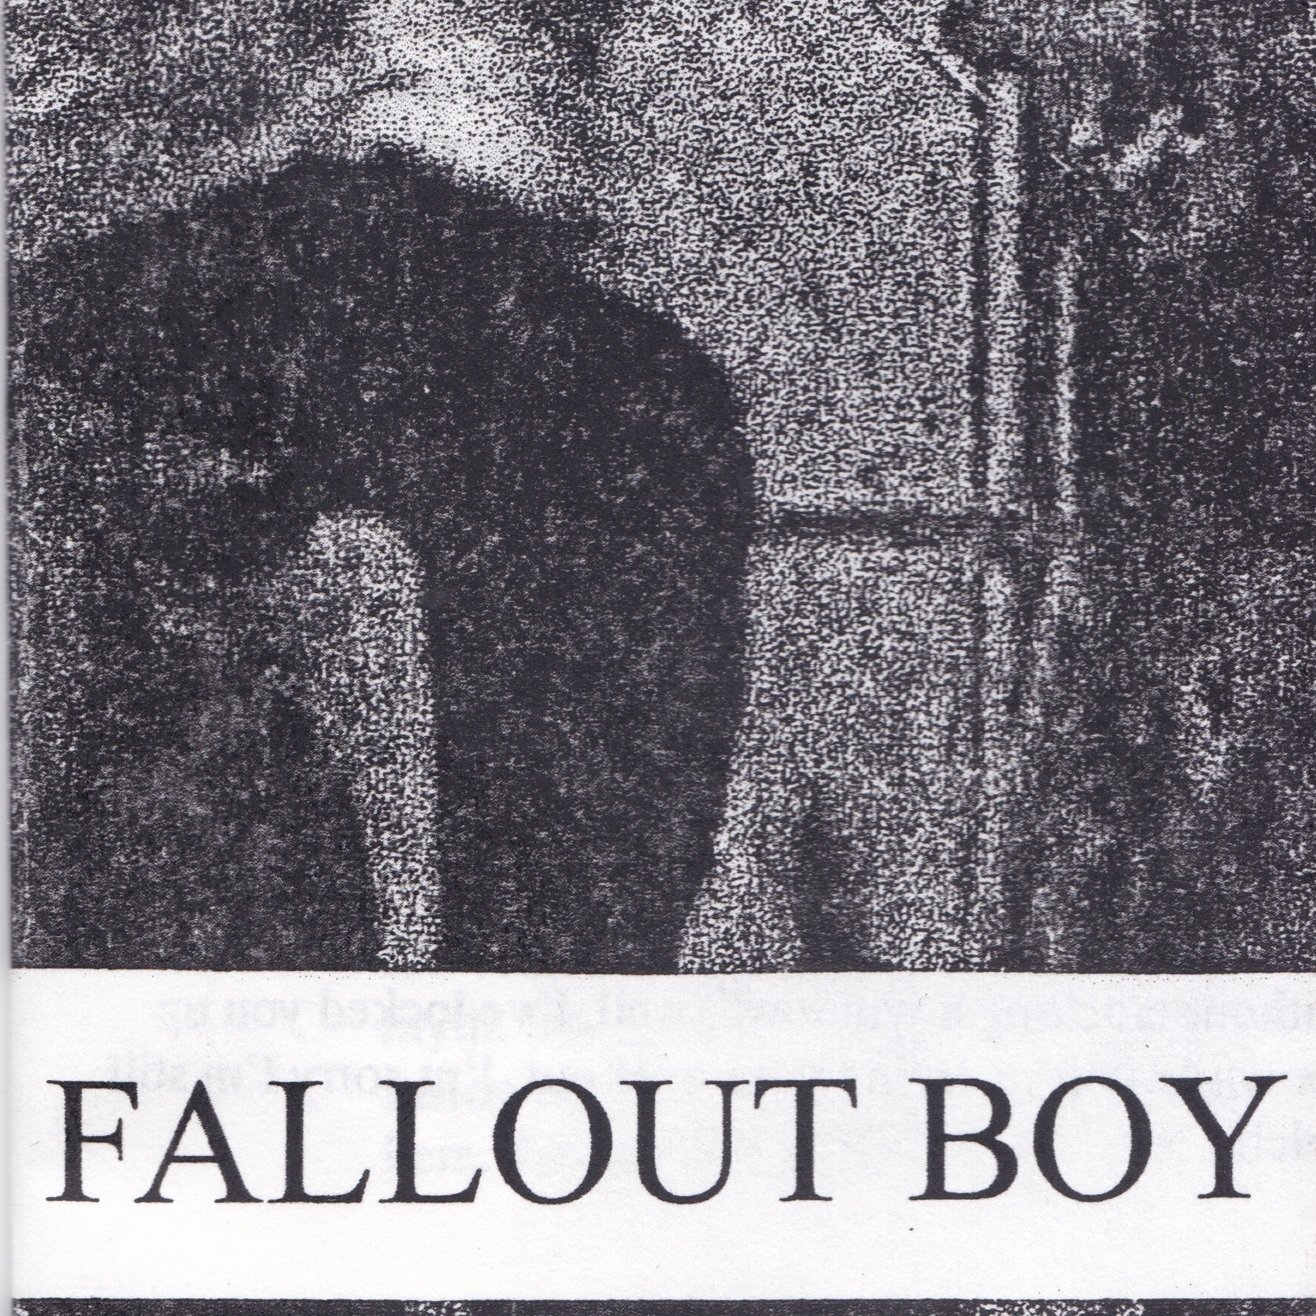 Fallout boy слушать. Demo fall